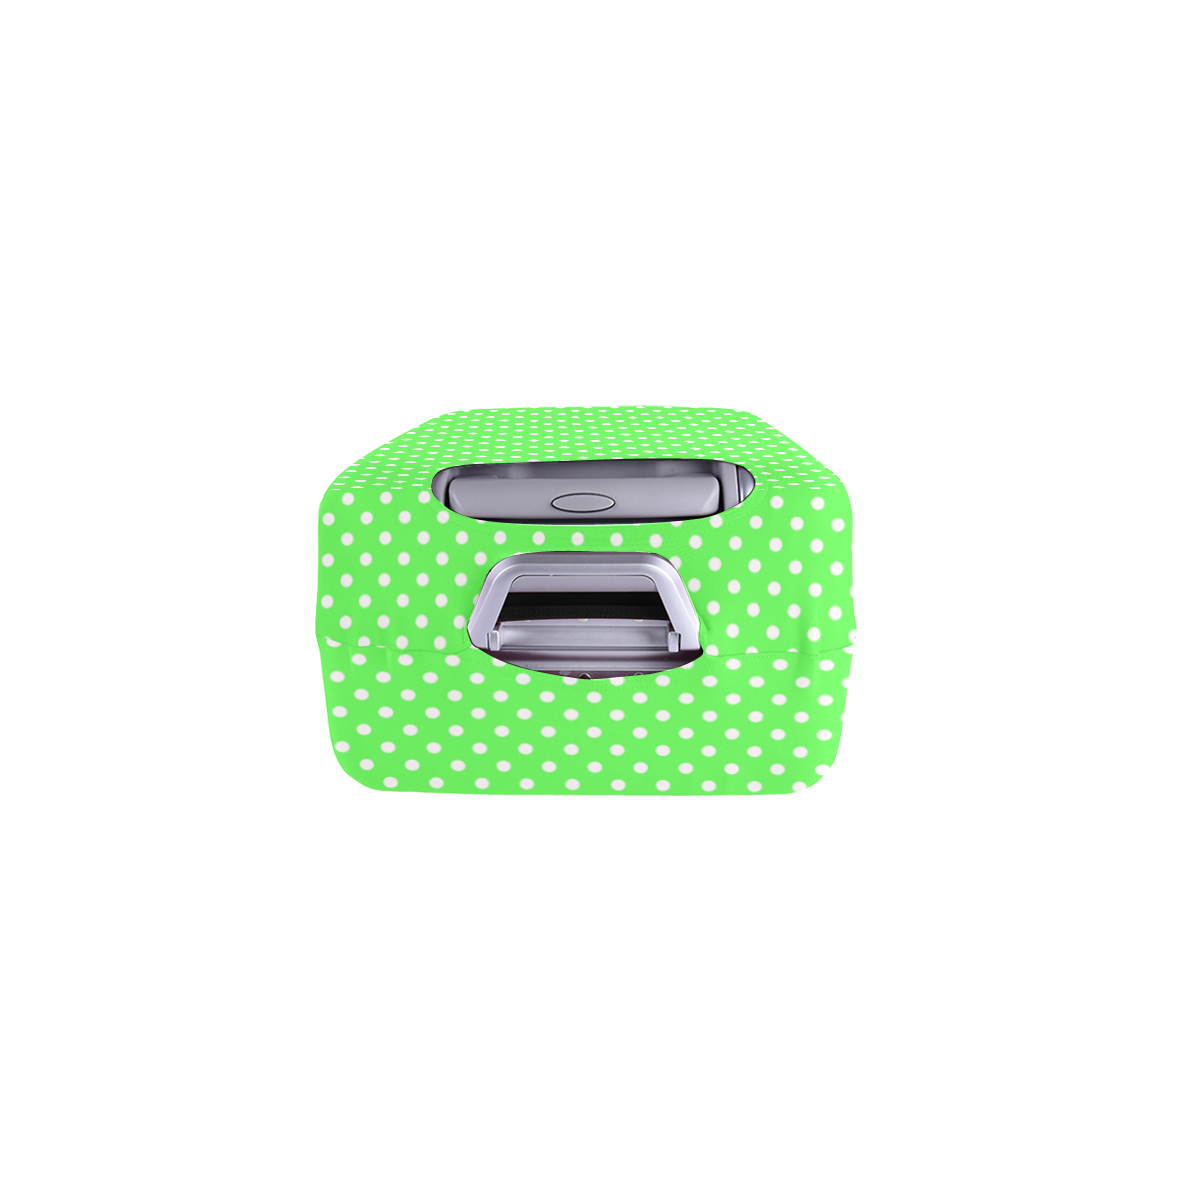 Eucalyptus green polka dots Luggage Cover/Small 18"-21"